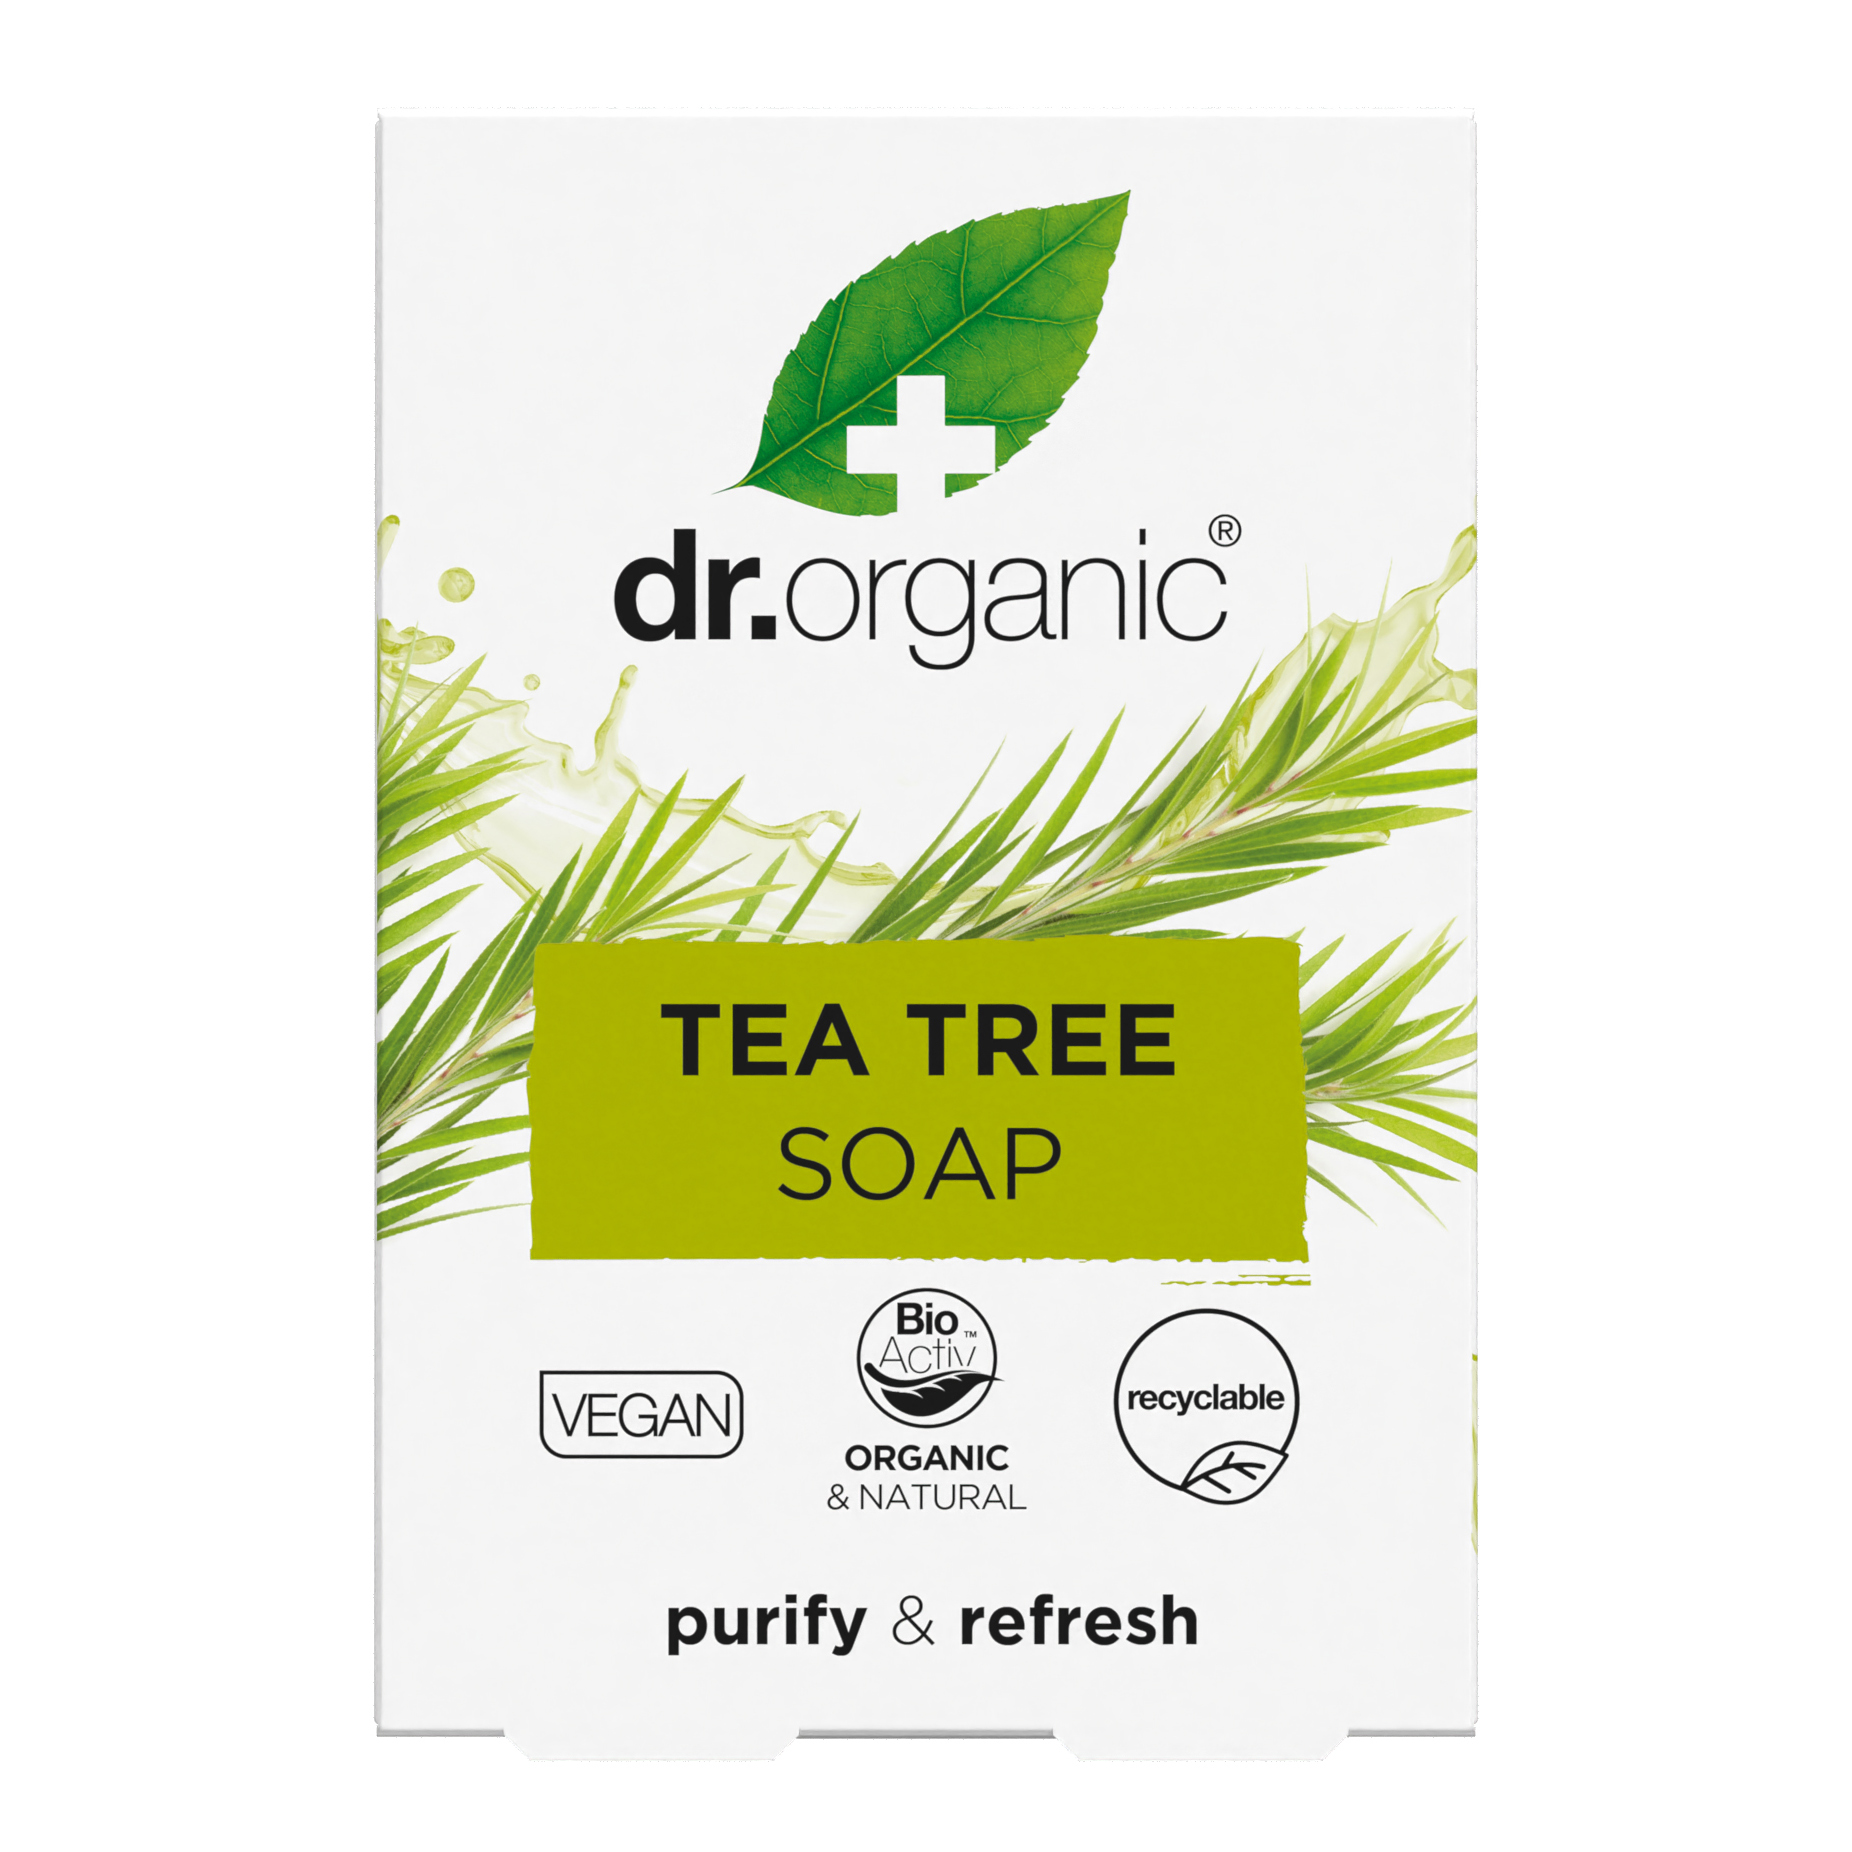 Dr Organic Tea Tree Soap 100g